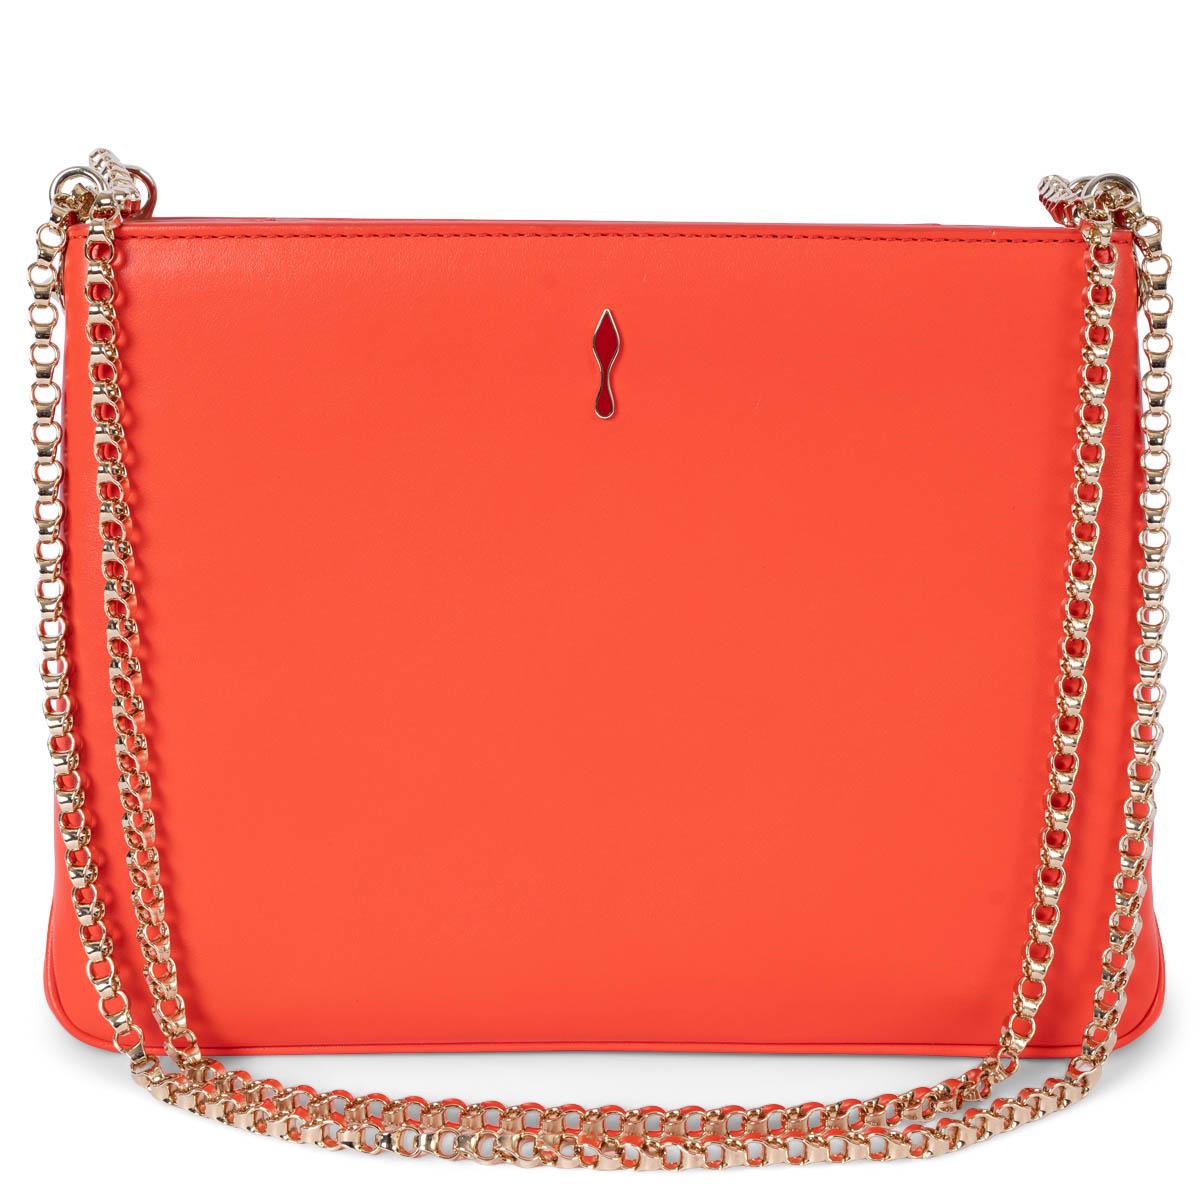 Christian Louboutin Bags & Handbags for Women for sale | eBay